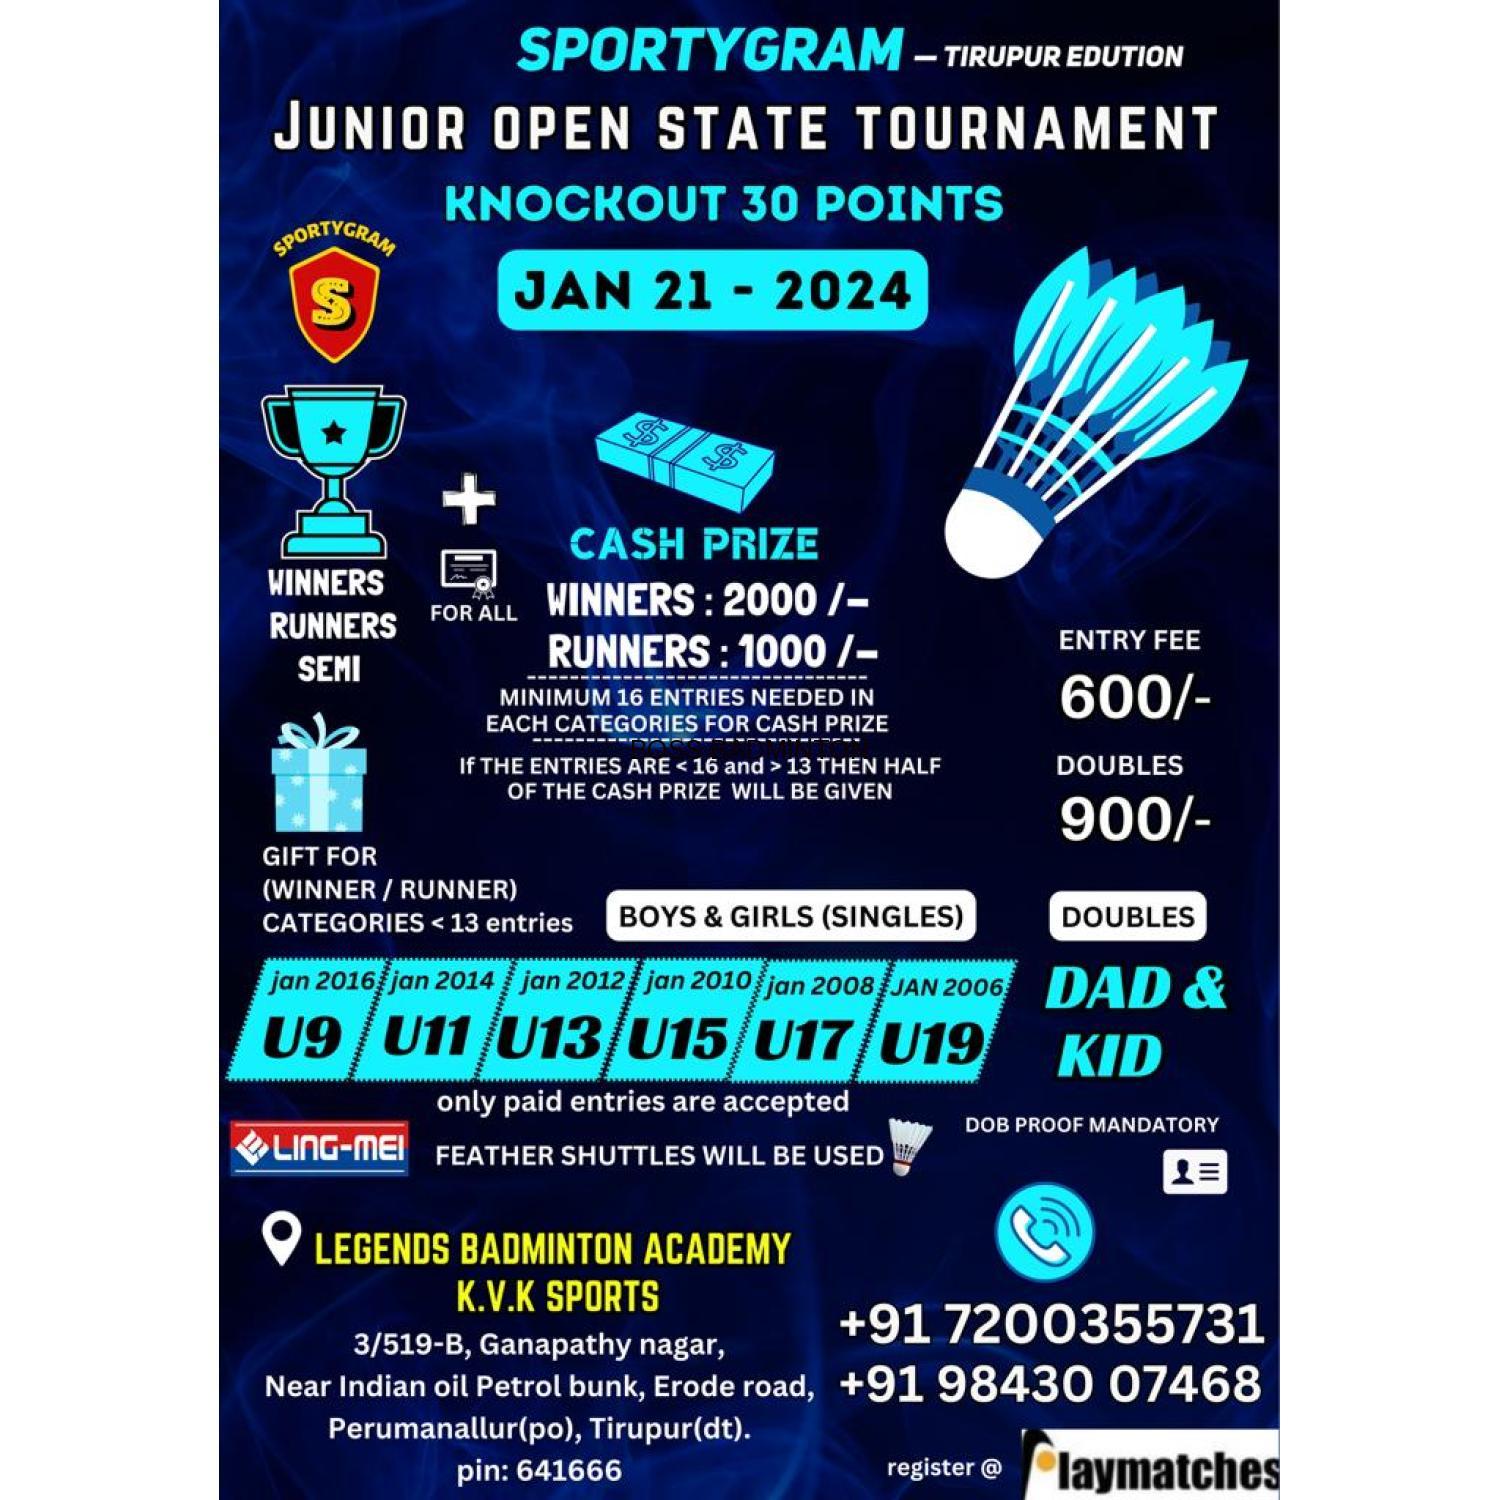 SPORTYGRAM Tirupur Edition - Junior Open State Tournament